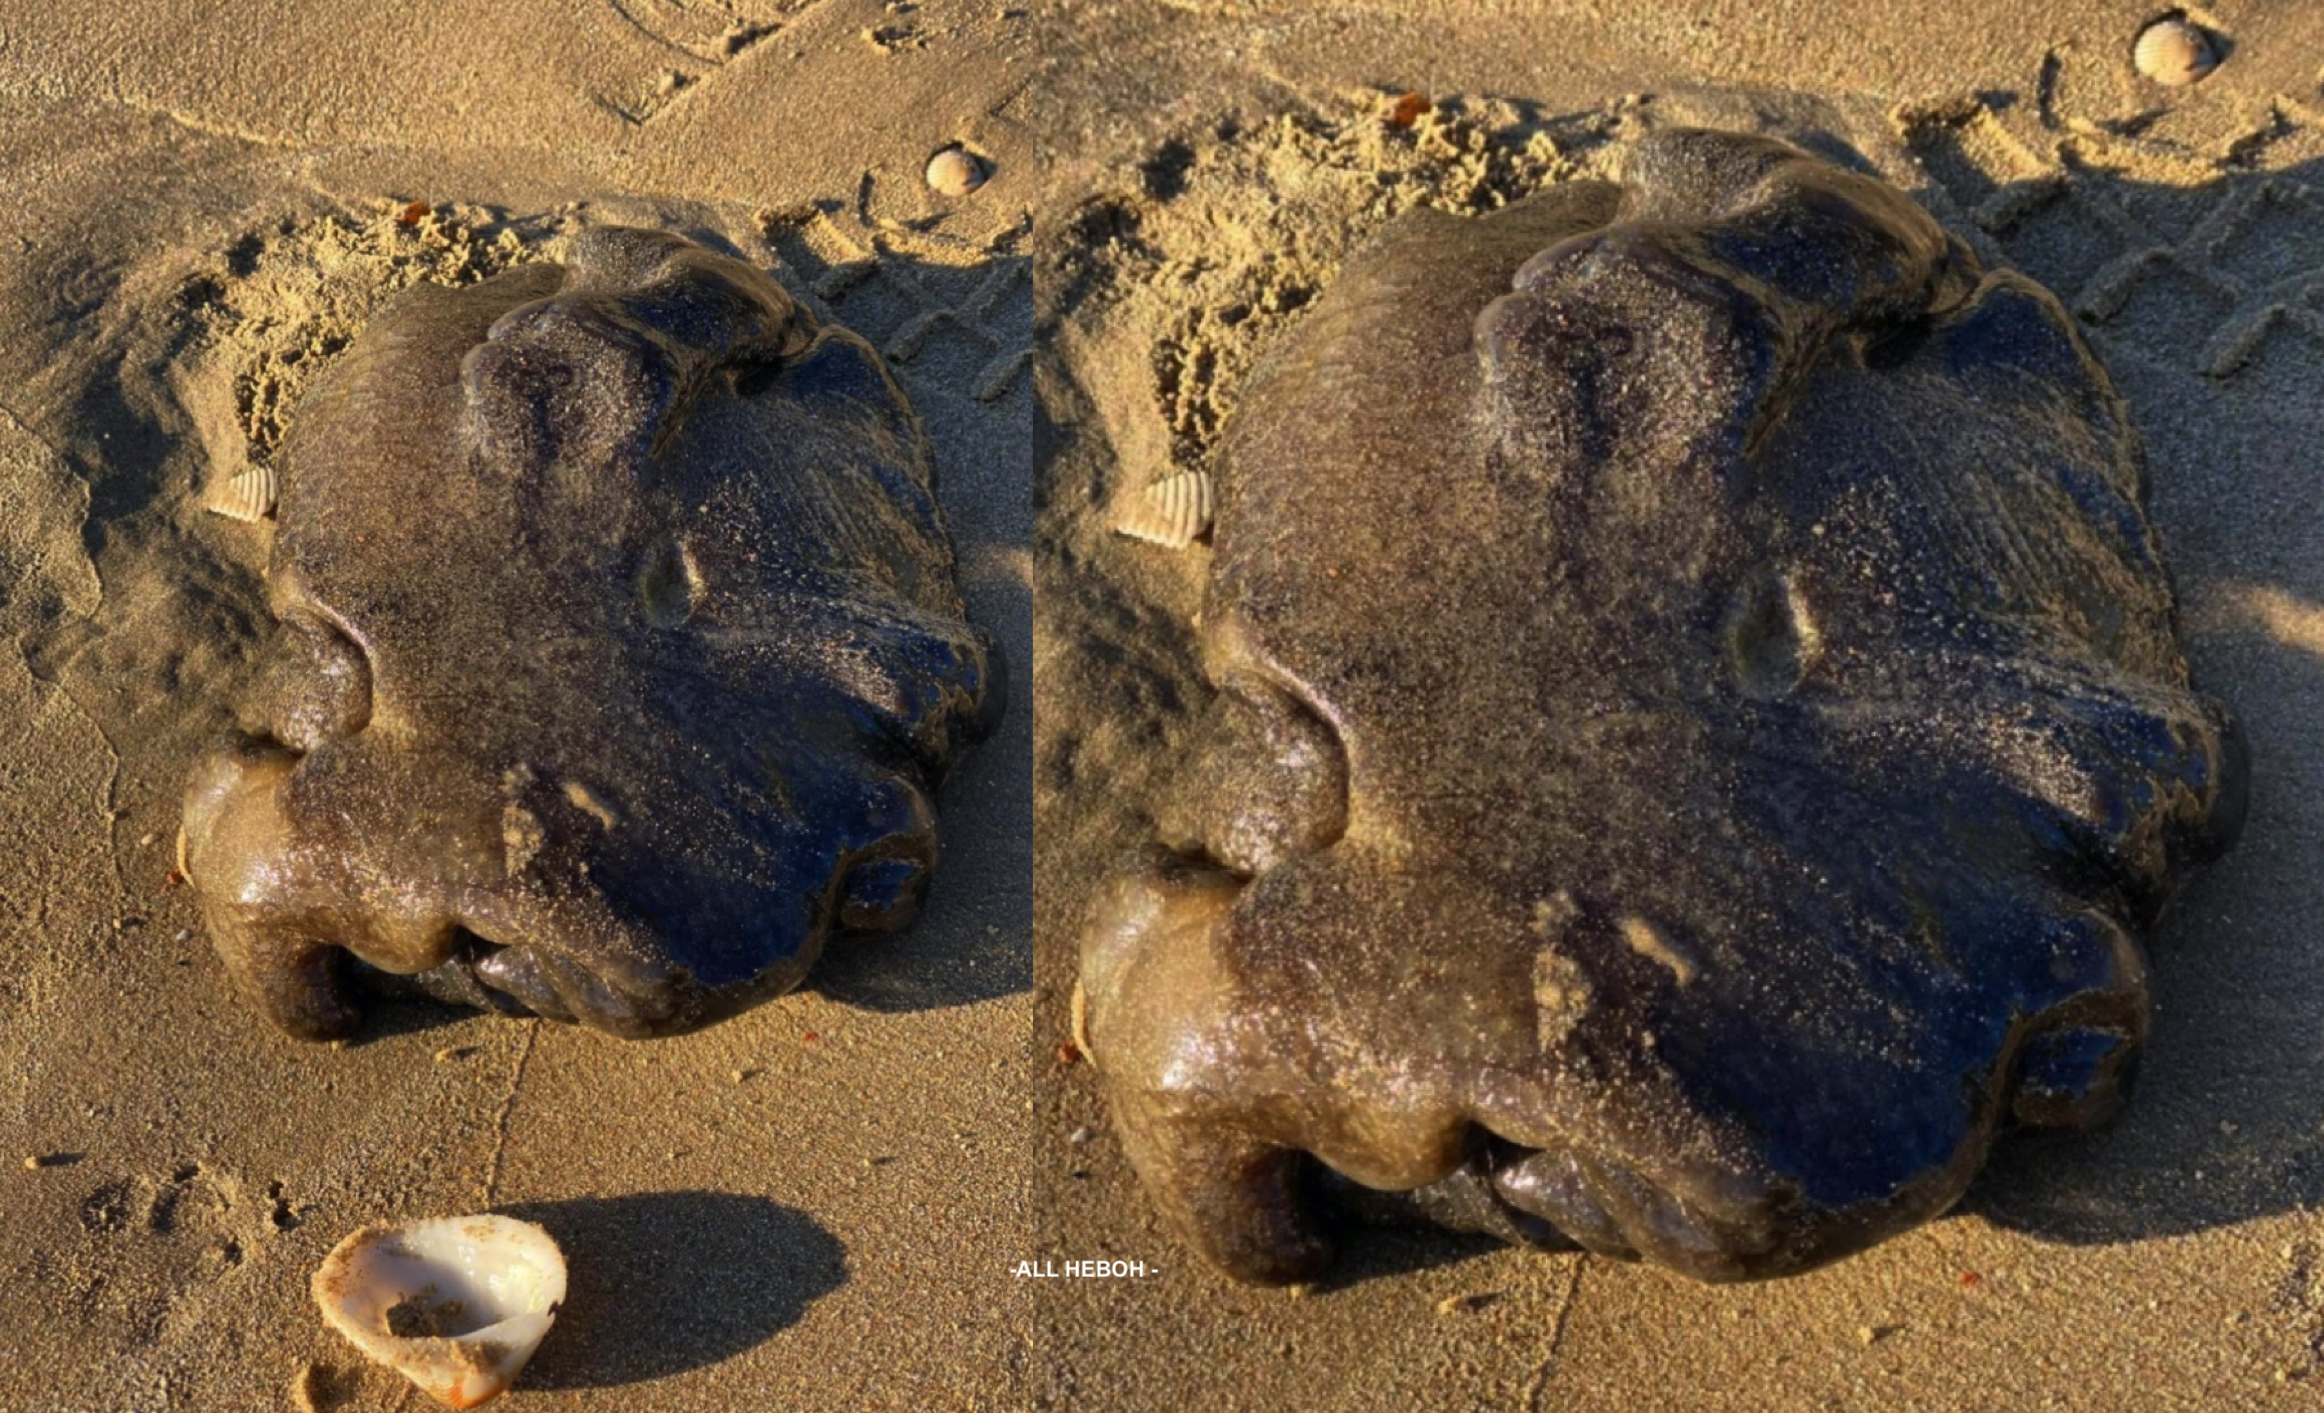 Makhluk Pelik Menyerupai Tompokan Jelly Ditemui Seorang Wanita Di Pantai, Disangka Ikan Batu Tapi Bukan